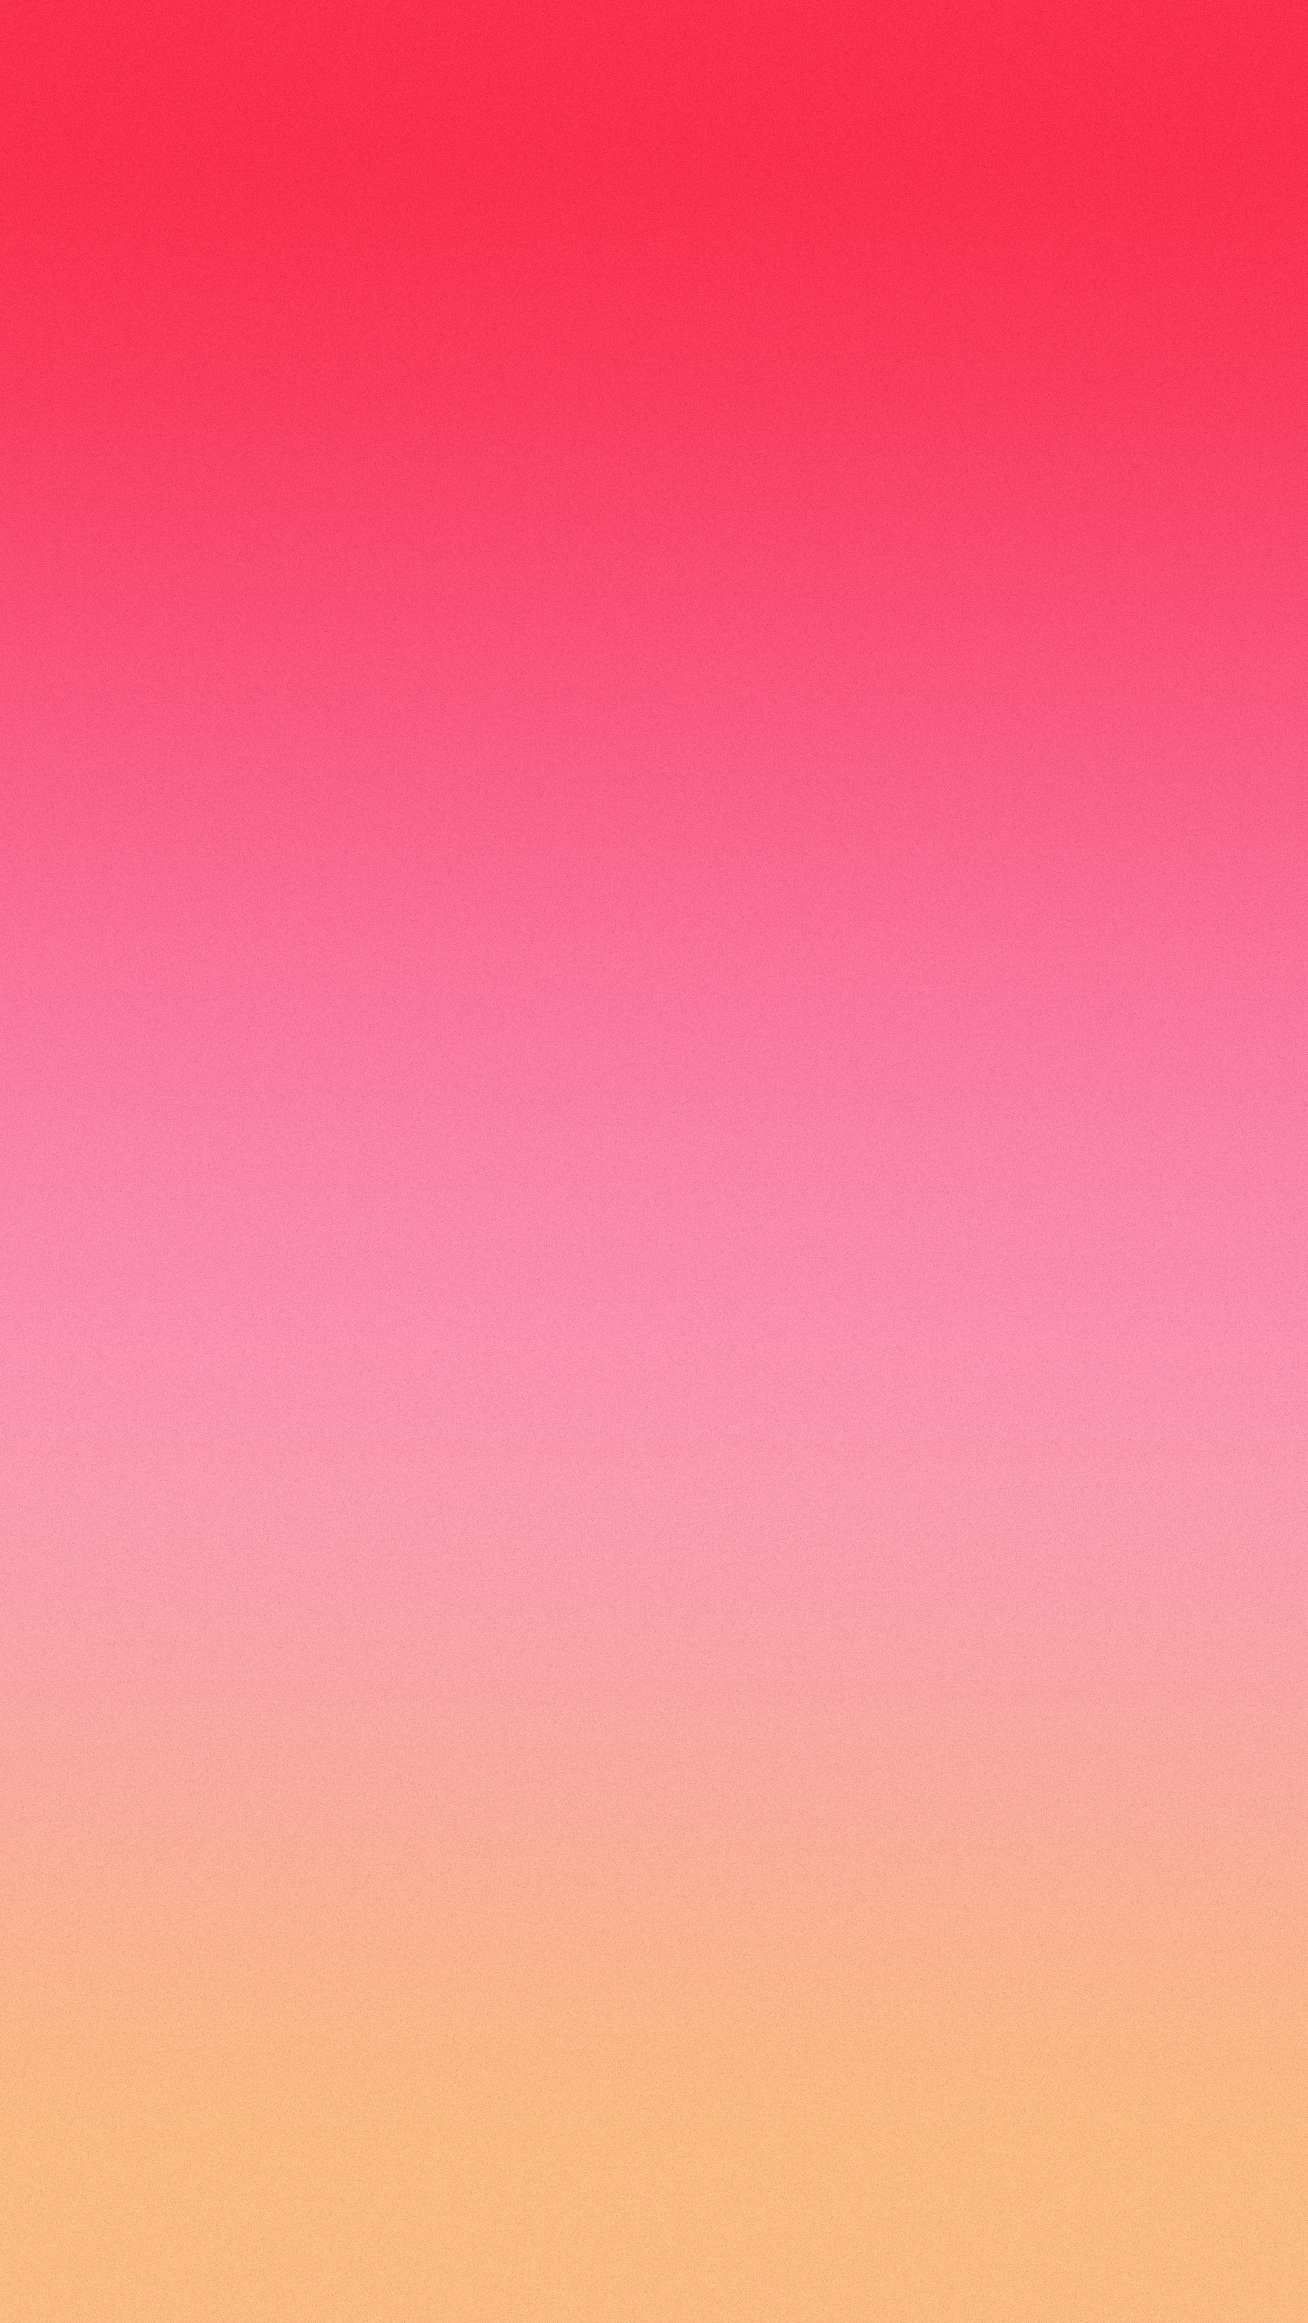 Beautiful Pink Orange Gradient Background Wallpaper. iPhone